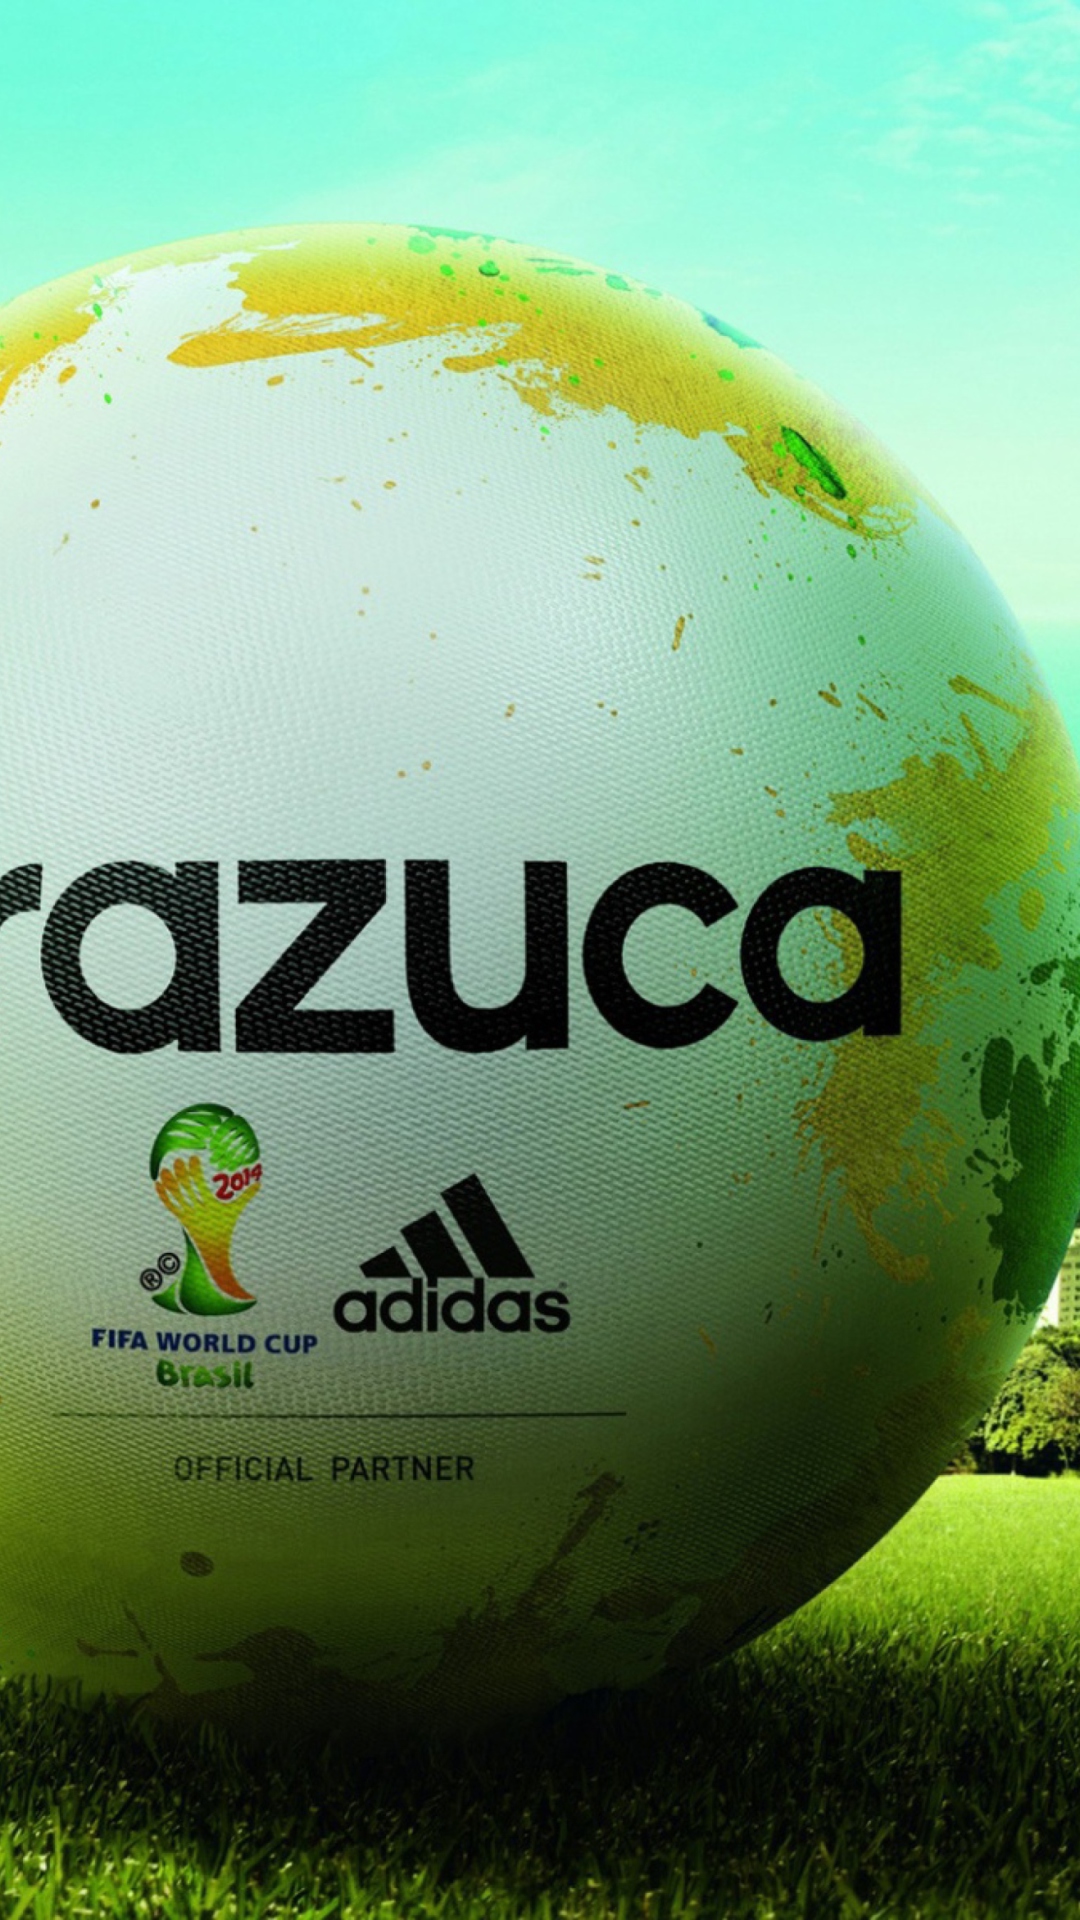 Adidas Brazuca Match Ball FIFA World Cup 2014 screenshot #1 1080x1920